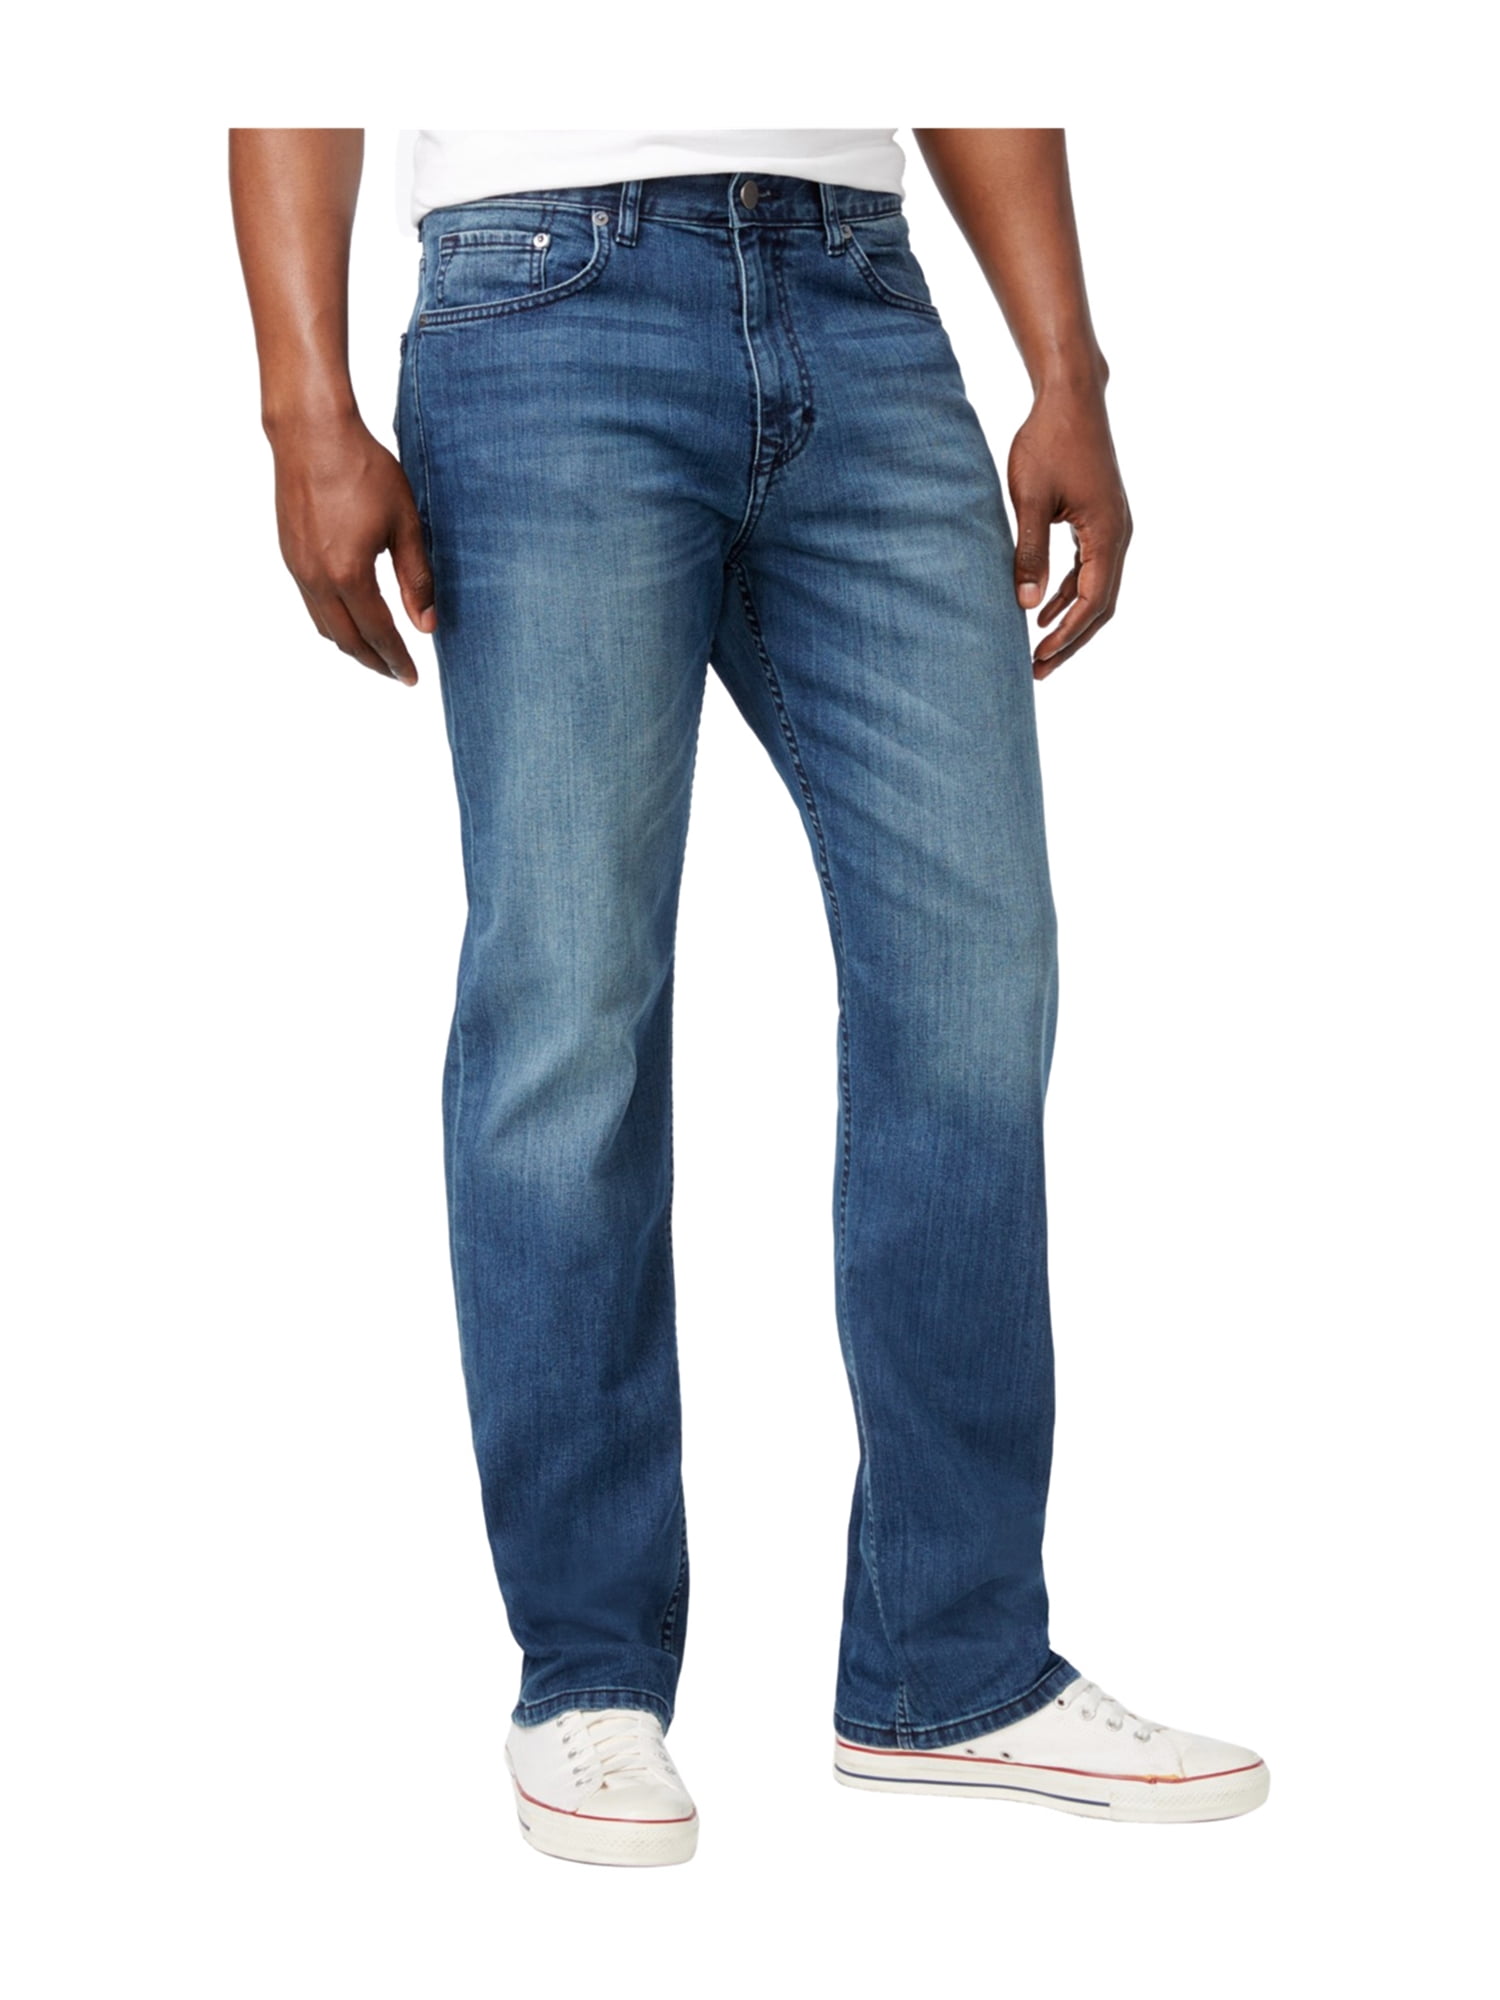 Landschap passen Beroep calvin klein jeans relaxed straight jean in cove wash - Walmart.com